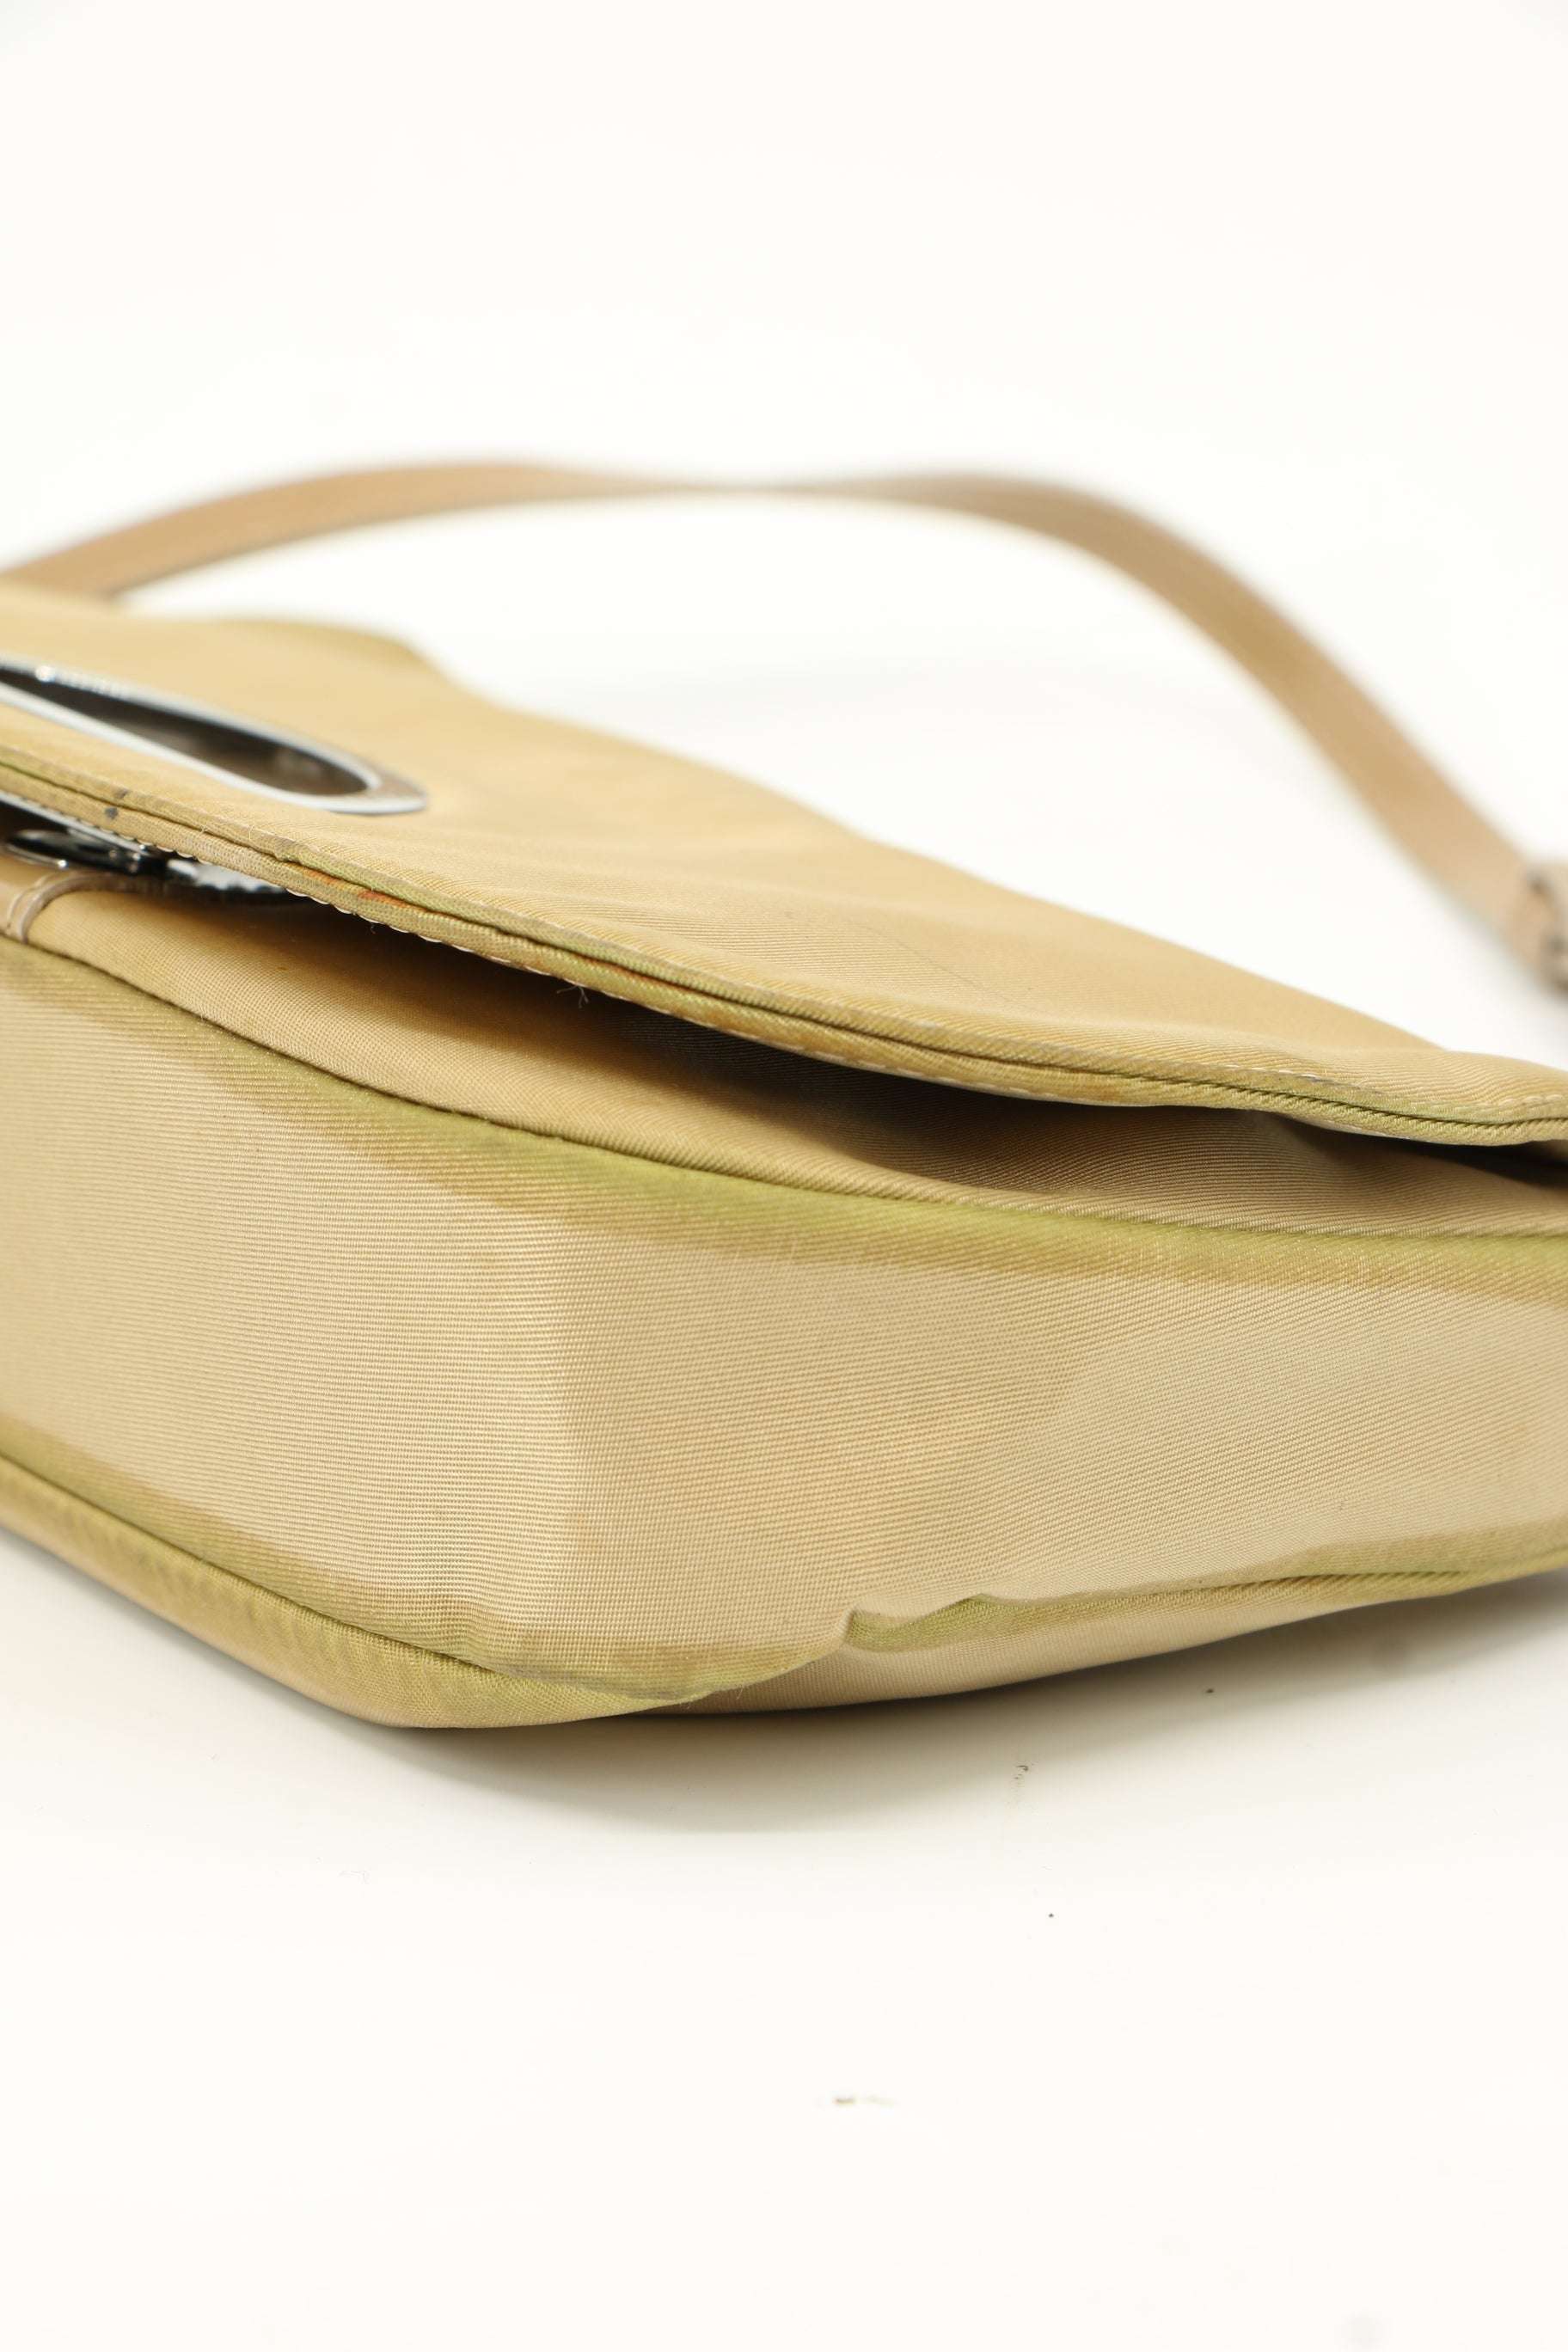 Christian Dior Handbags - Maris Pearl Black Patent Leather Bag